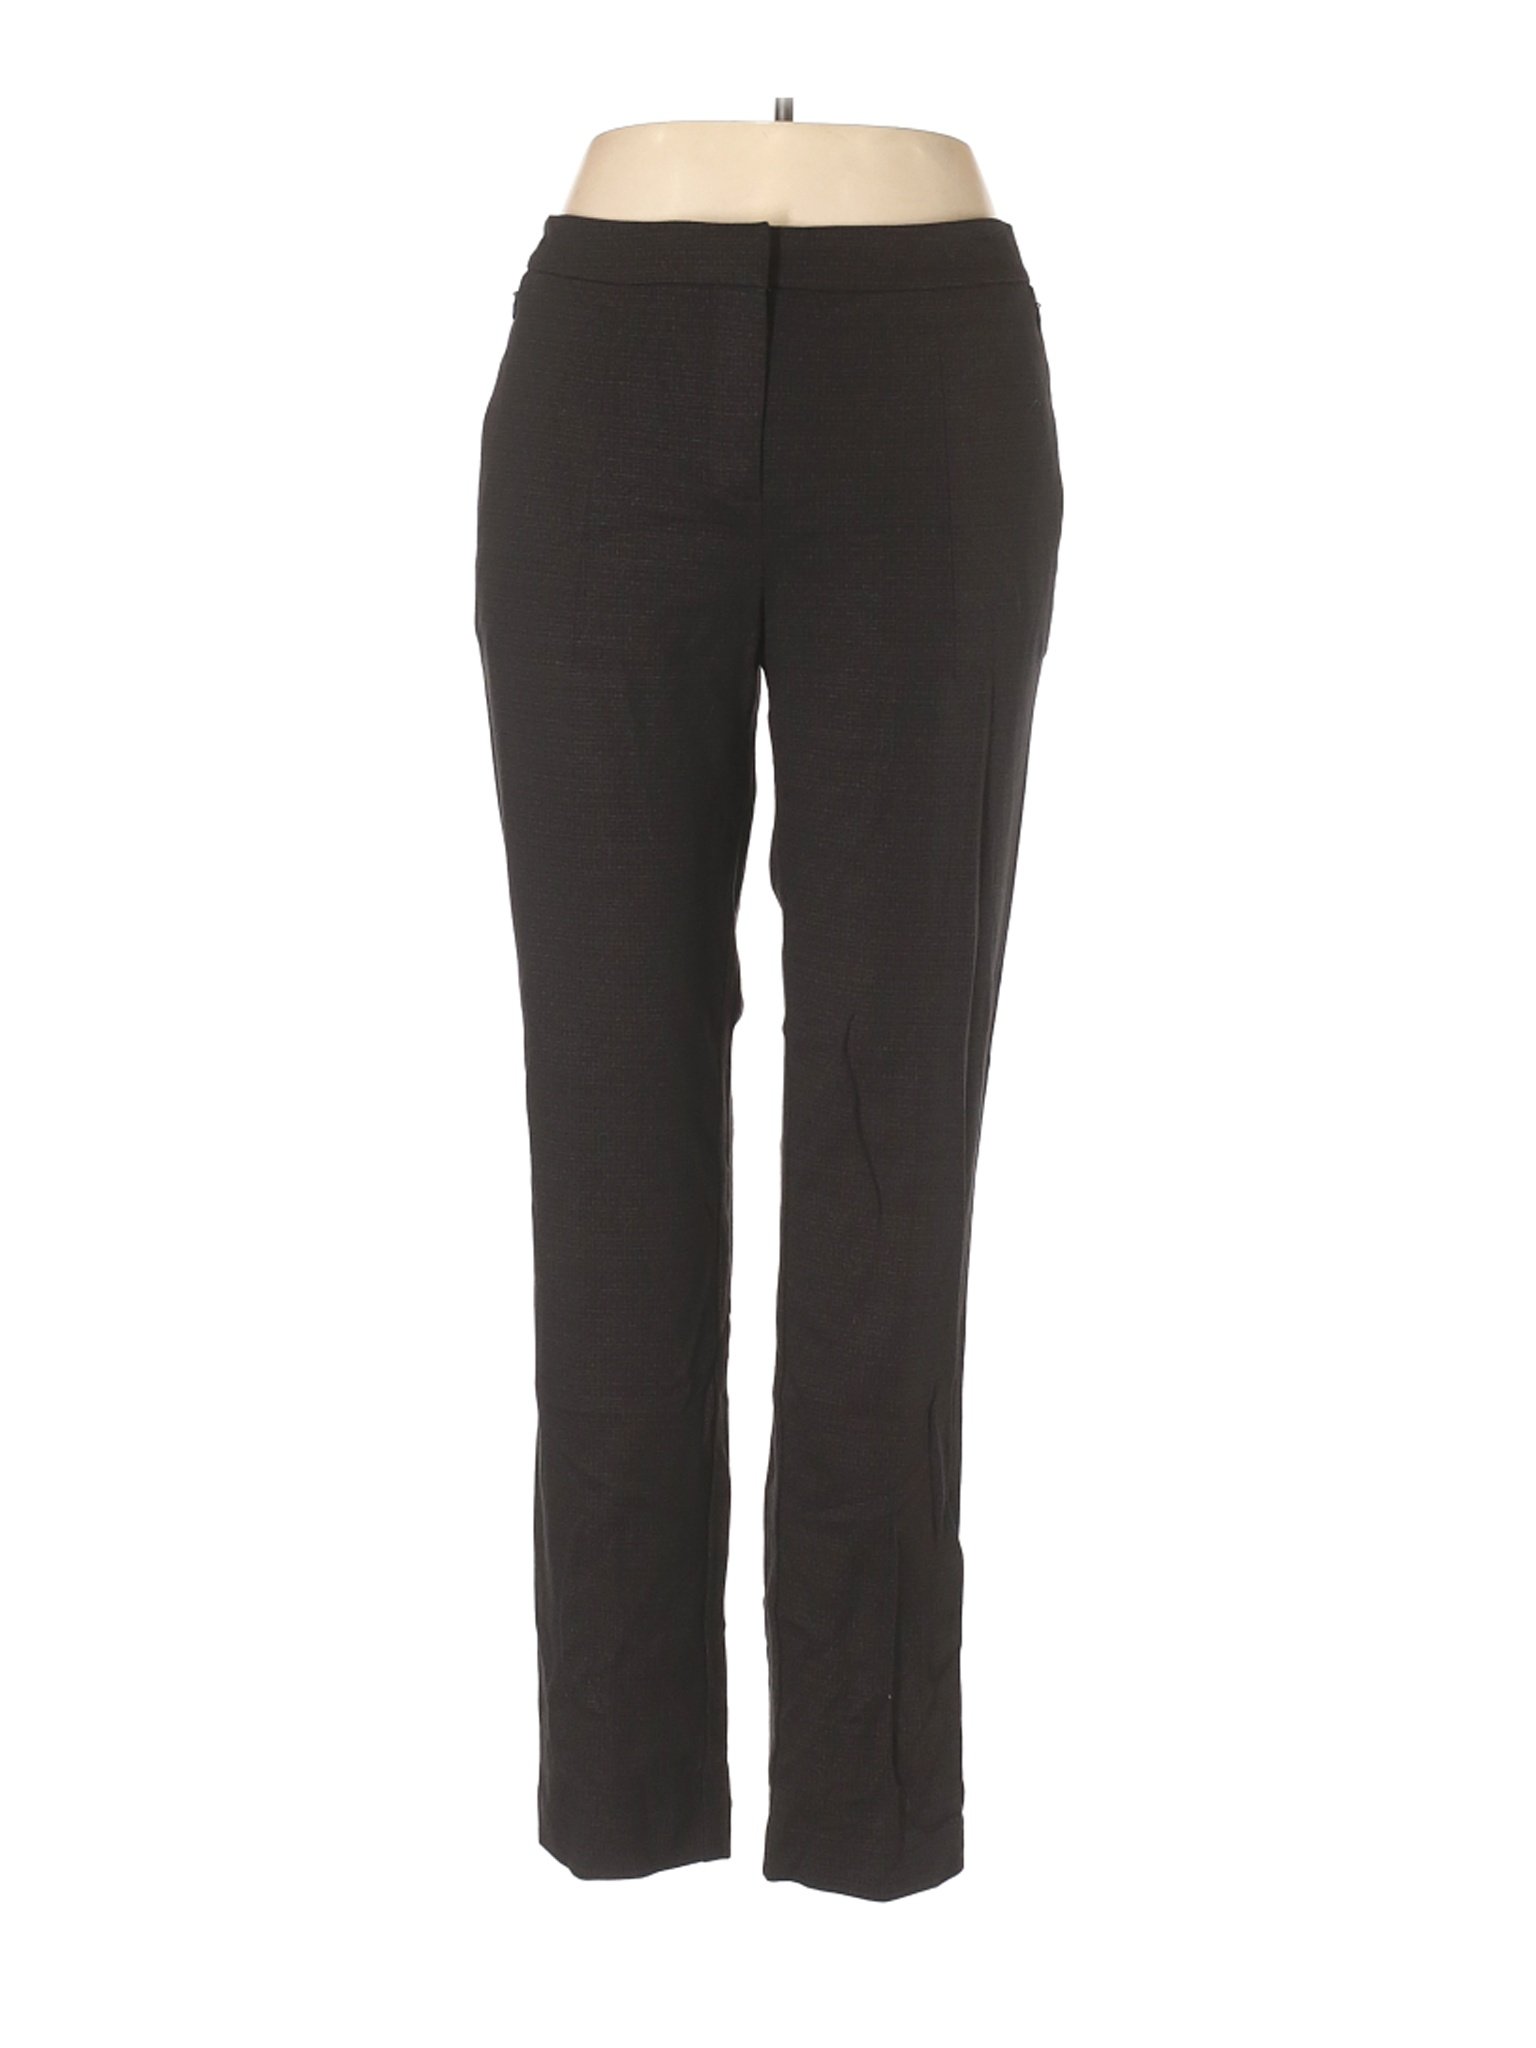 Amanda + Chelsea Women Black Dress Pants 14 | eBay